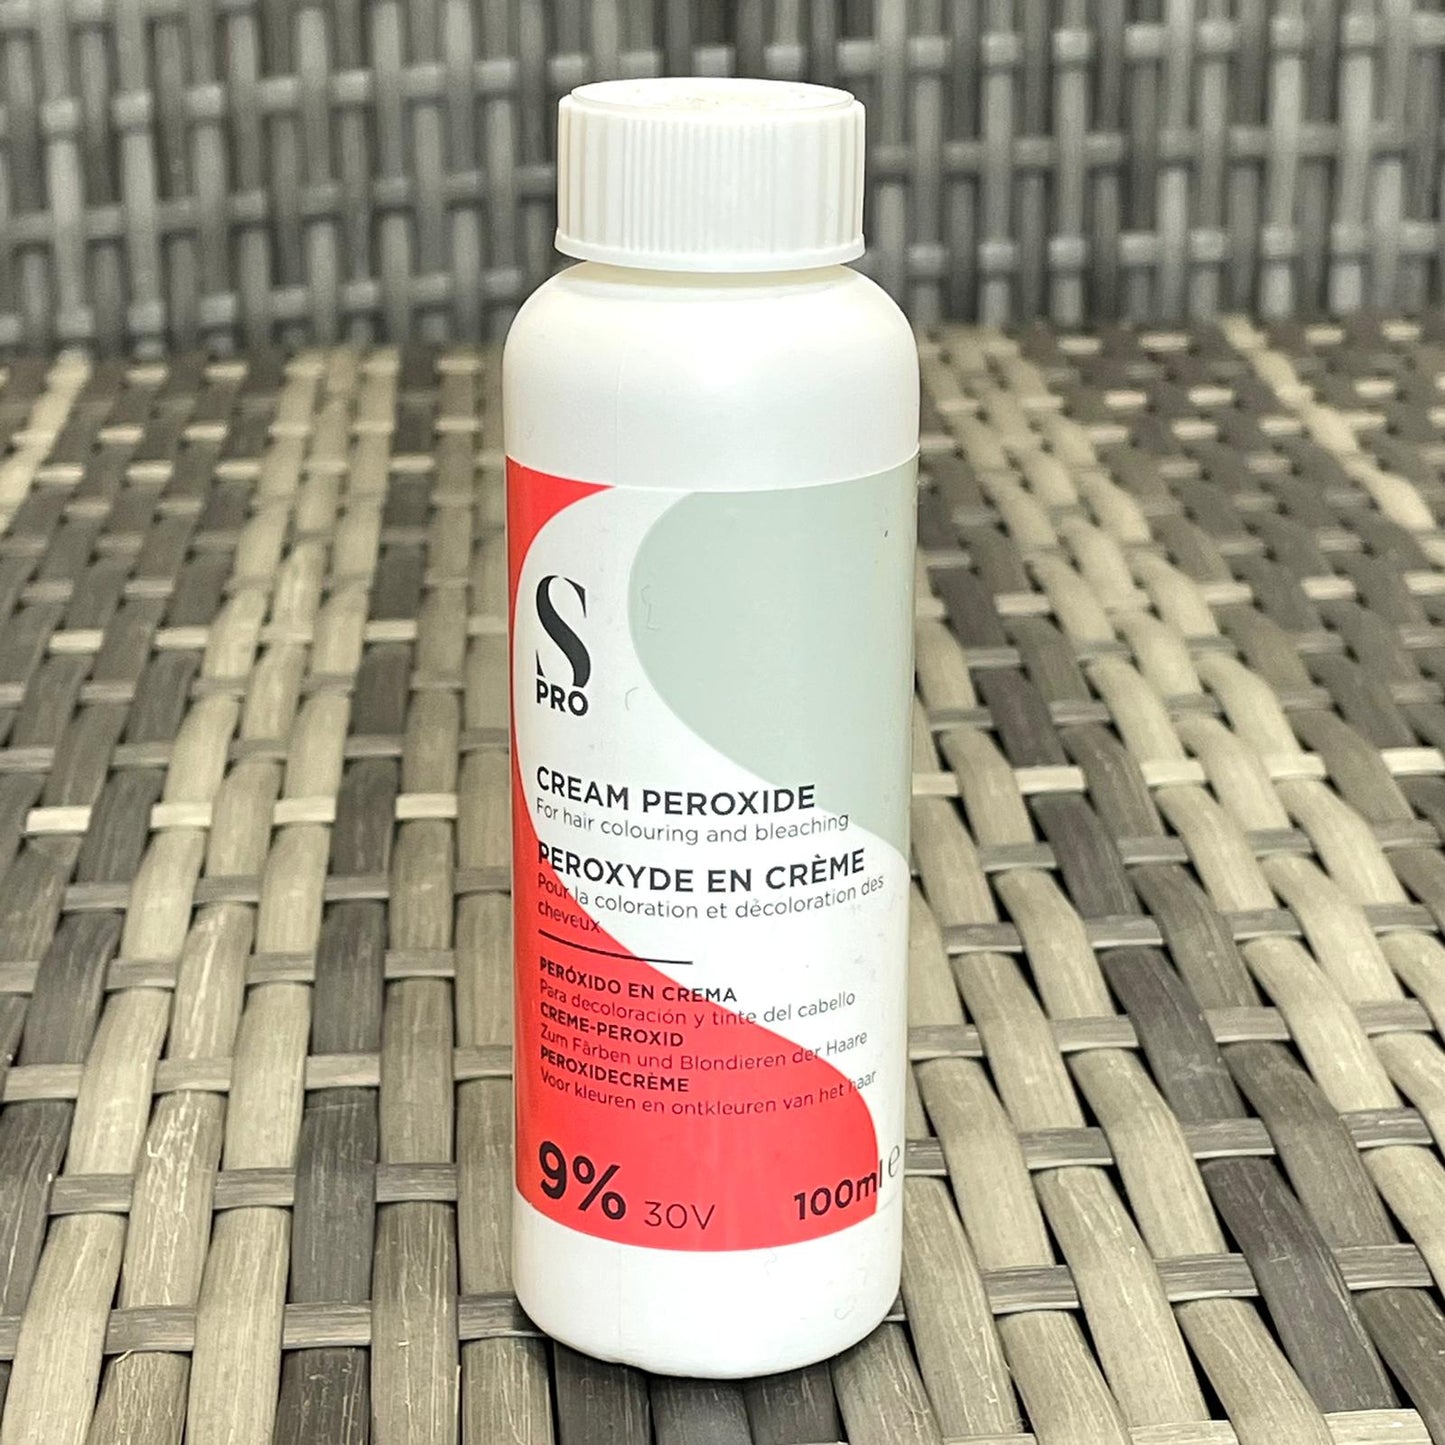 S-PRO Oxycream Peroxide Developer 9%/30V 100ml